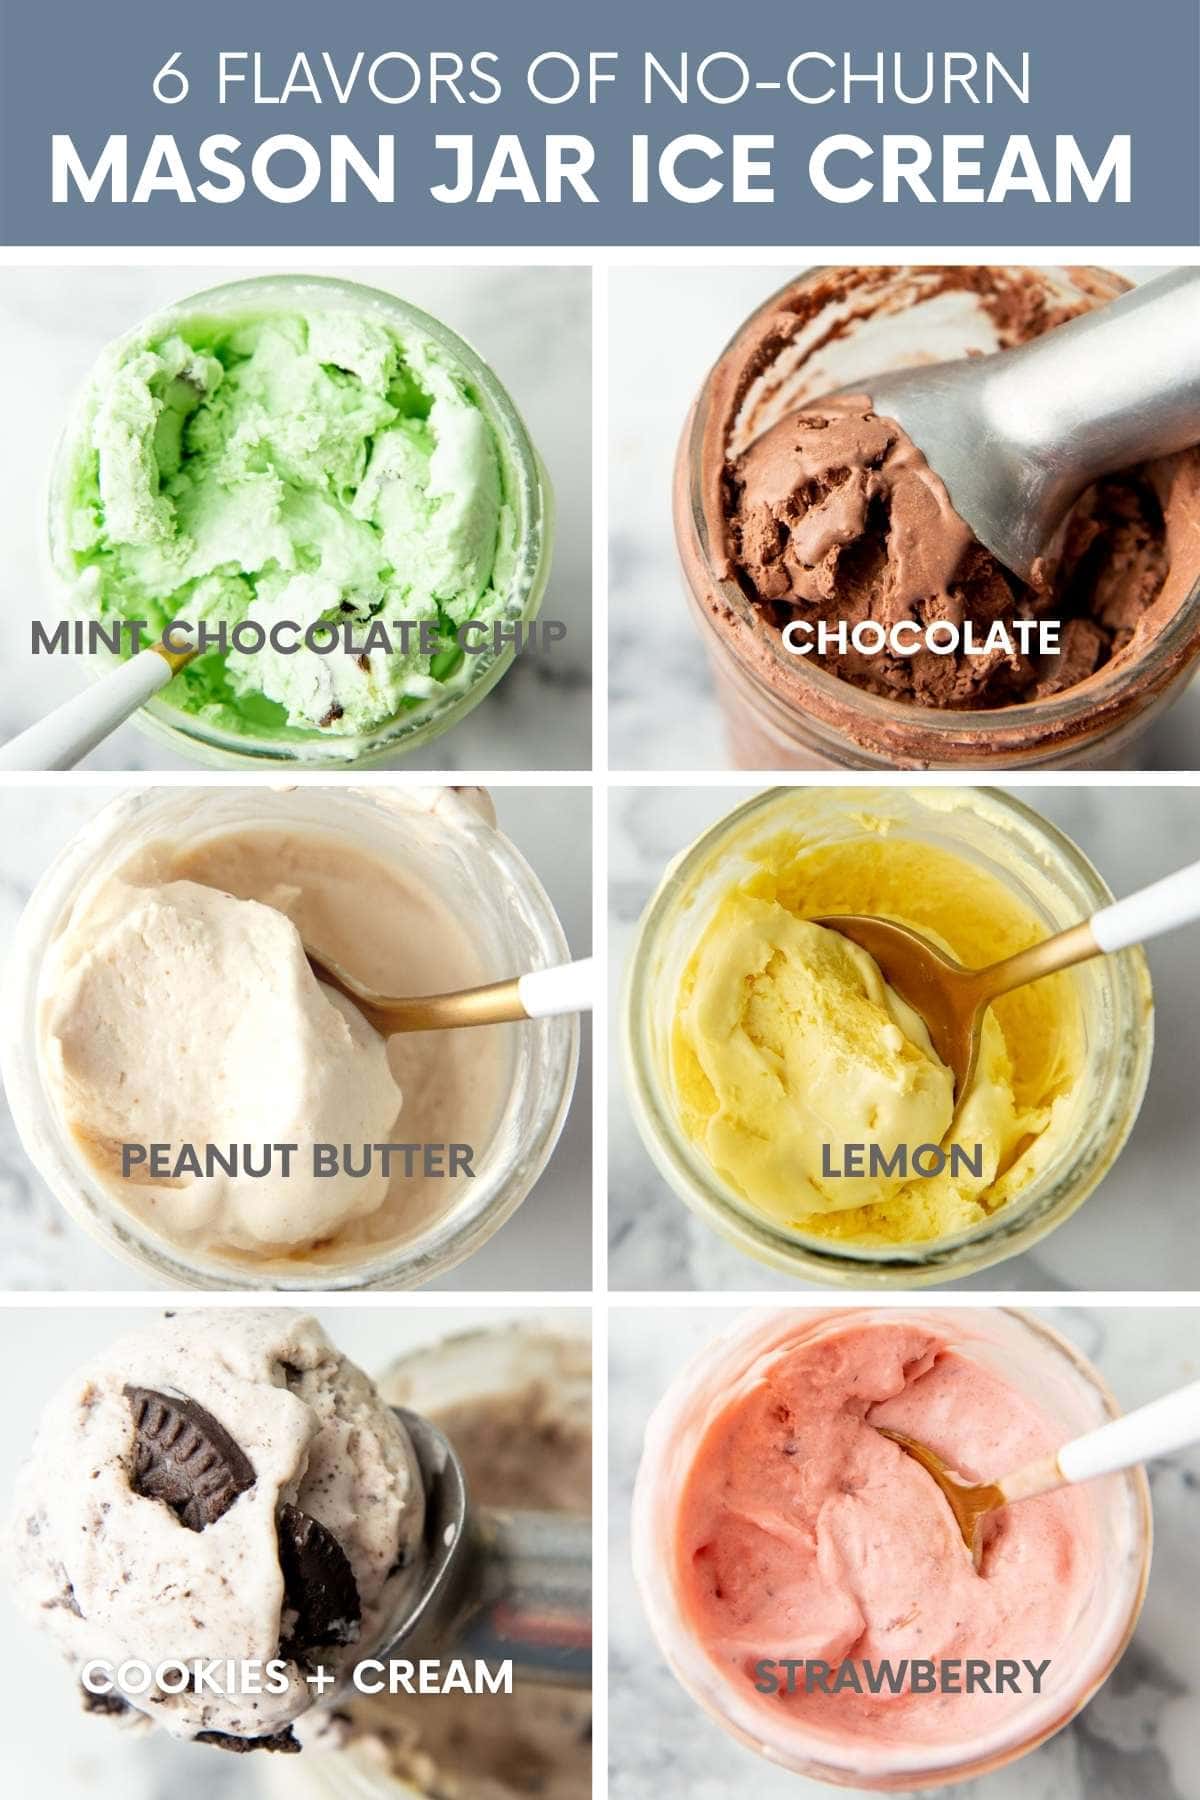 A split image shows "6 flavors of no-churn mason jar ice cream" — mint chocolate chip, chocolate, peanut butter, lemon, cookies + cream, strawberry.